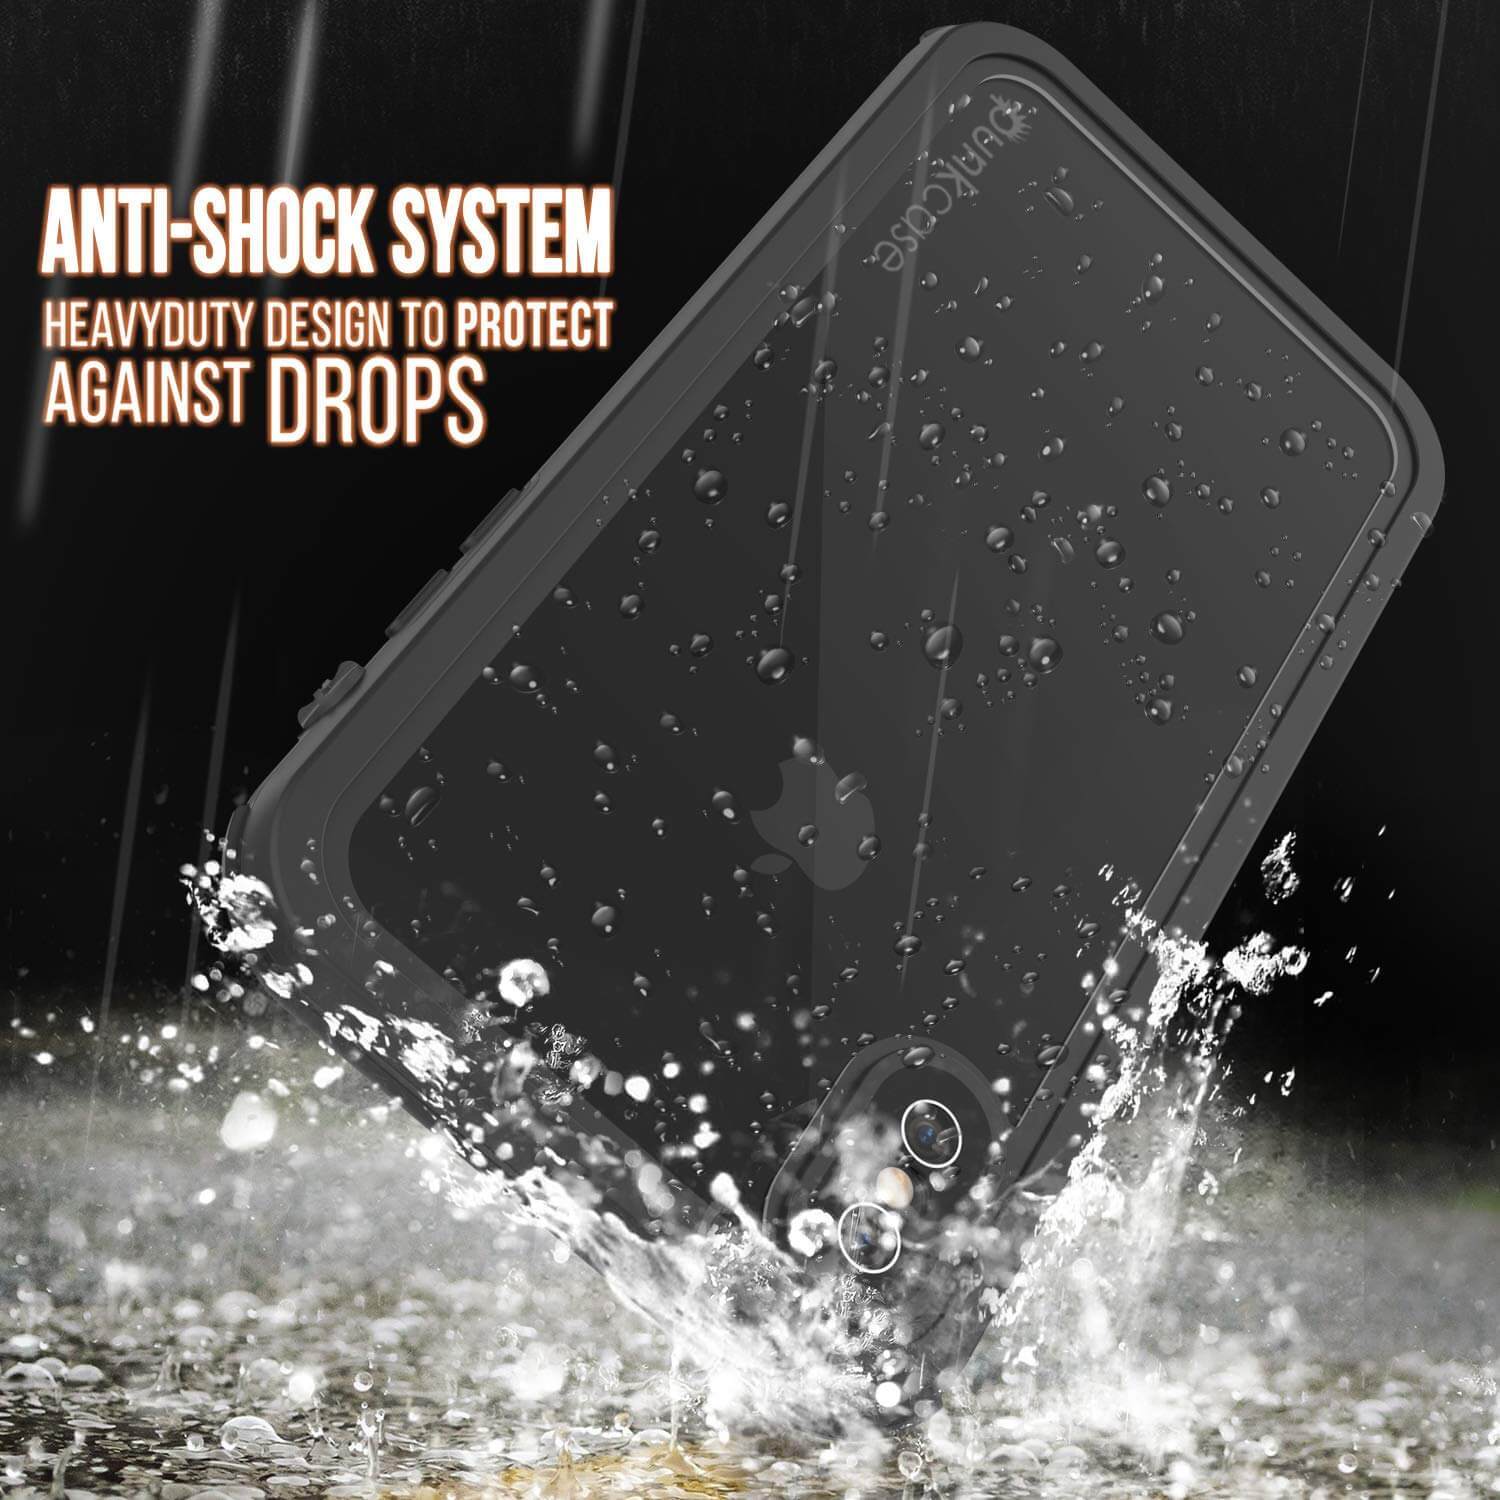 iPhone XS Waterproof IP68 Case, Punkcase [white] [Rapture Series]  W/Built in Screen Protector